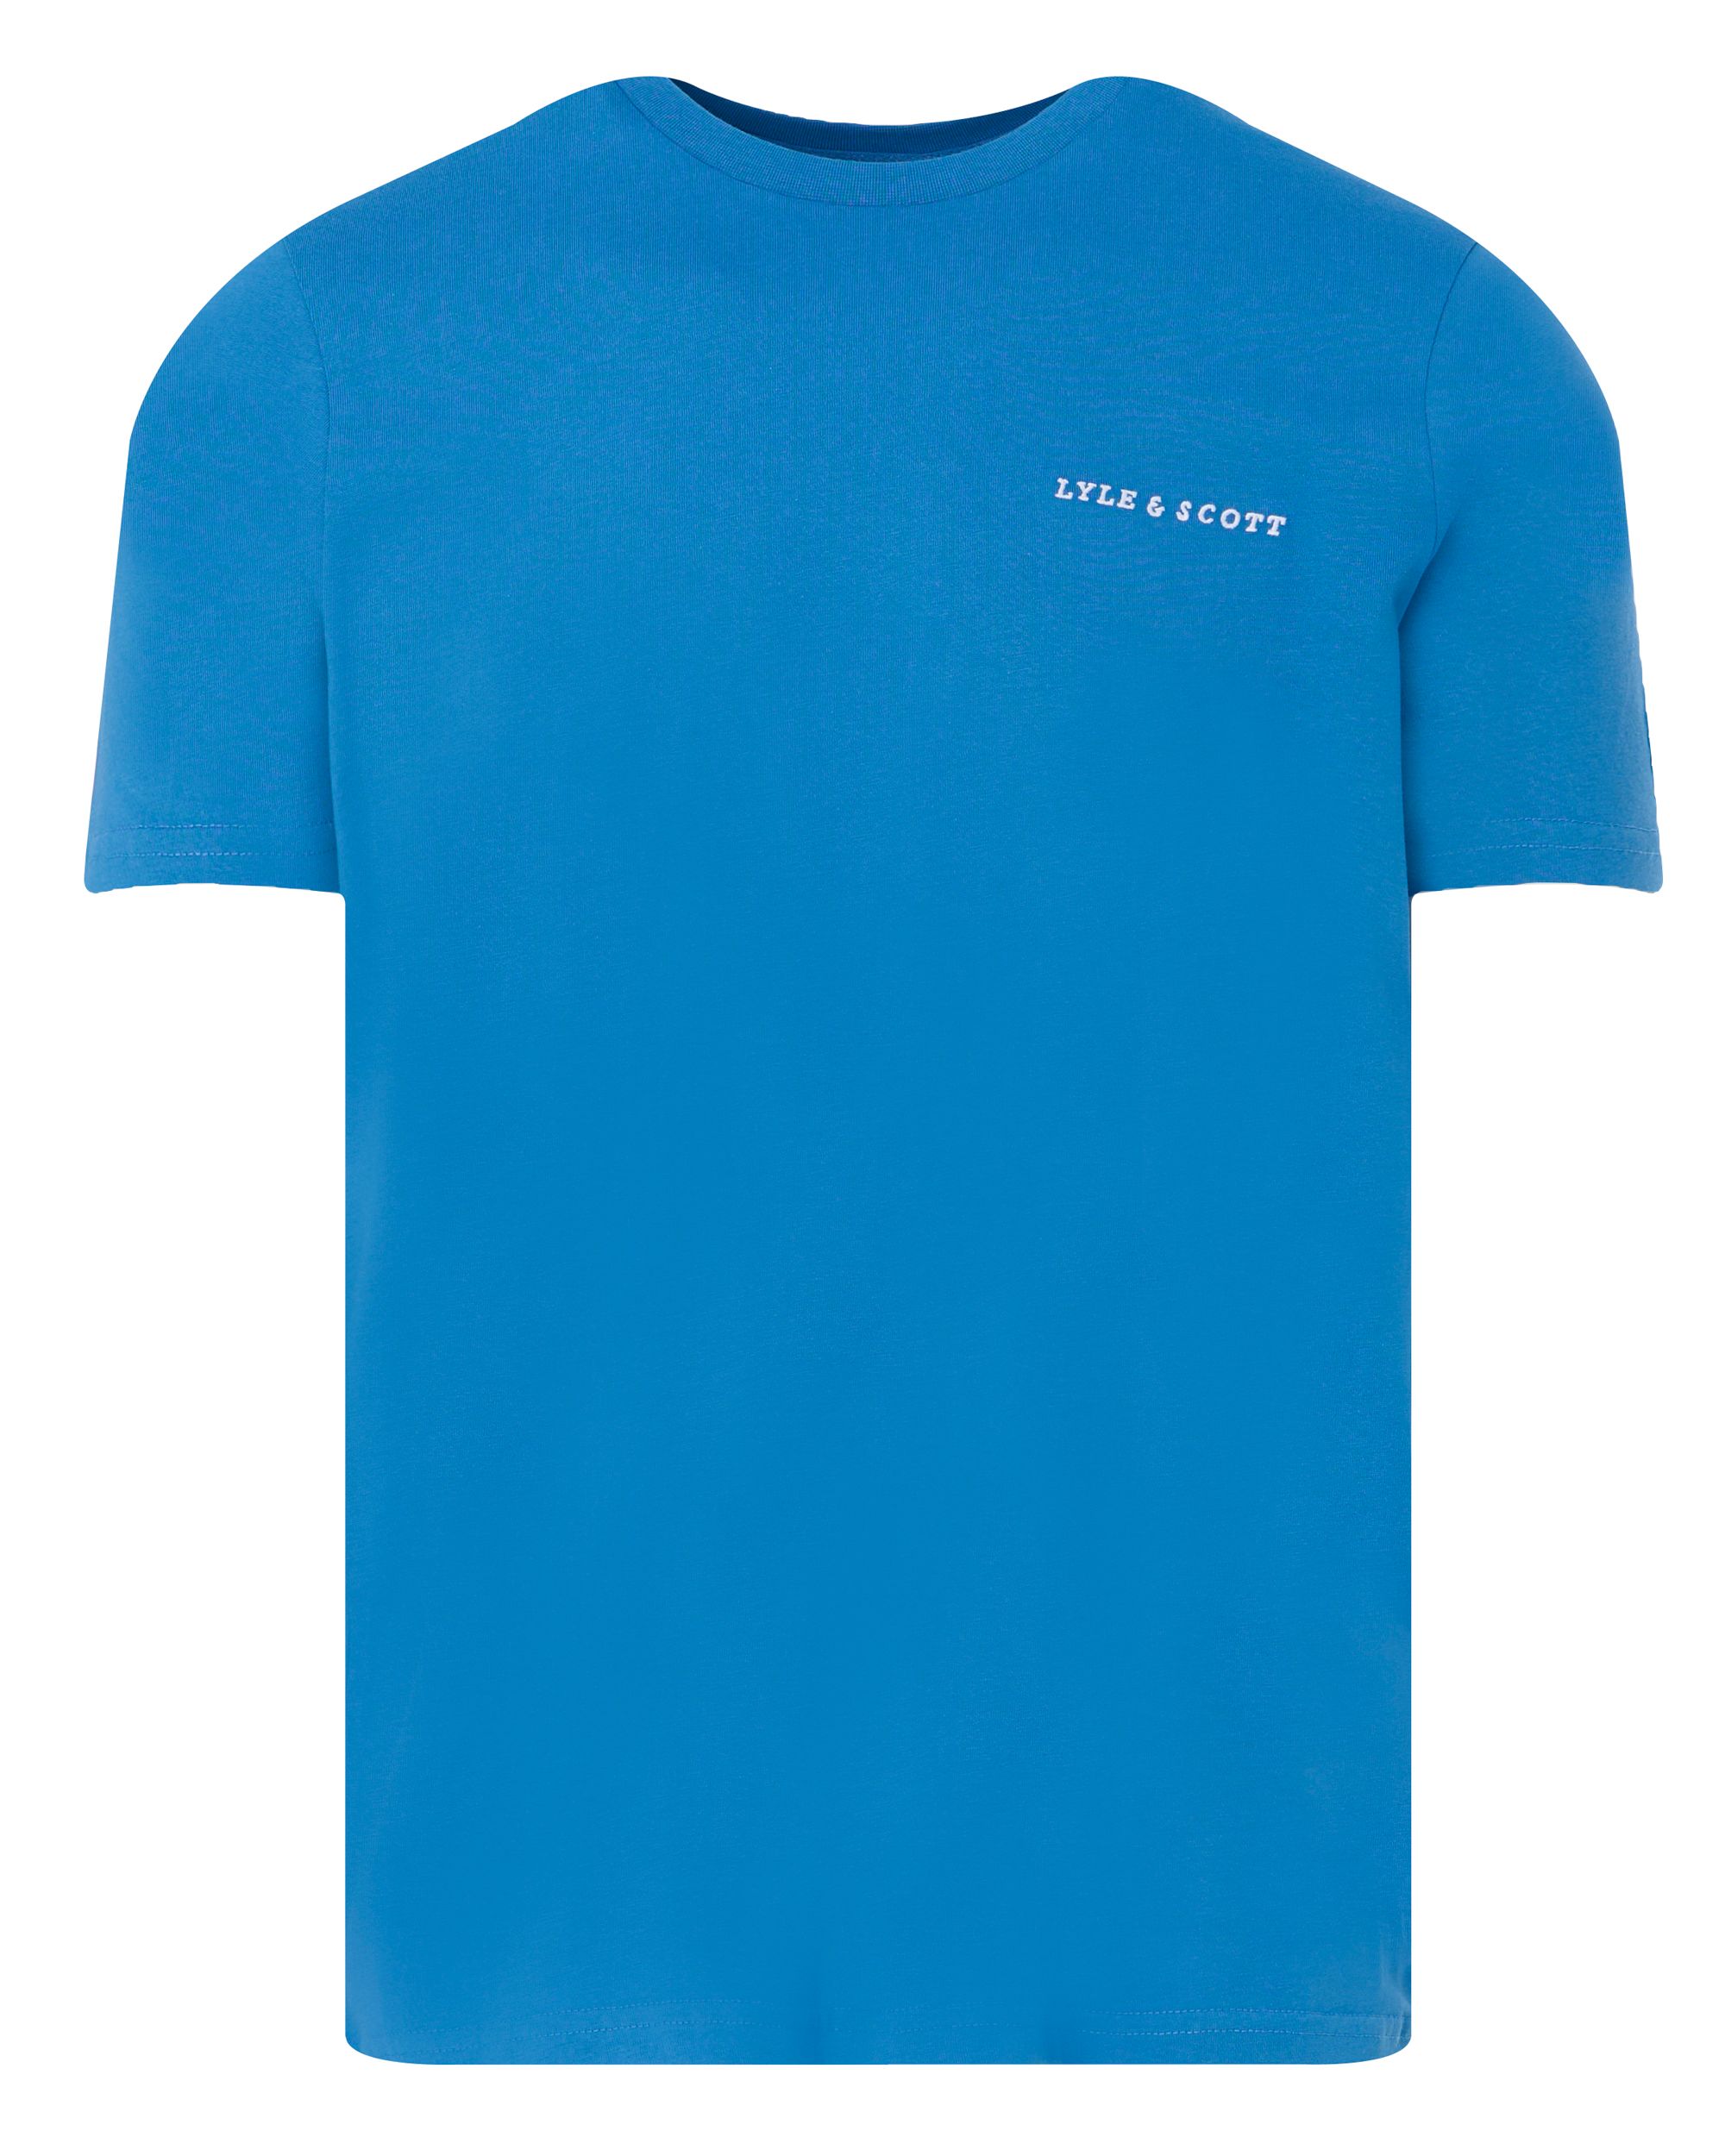 Lyle & Scott T-shirt KM Licht blauw 092268-001-L